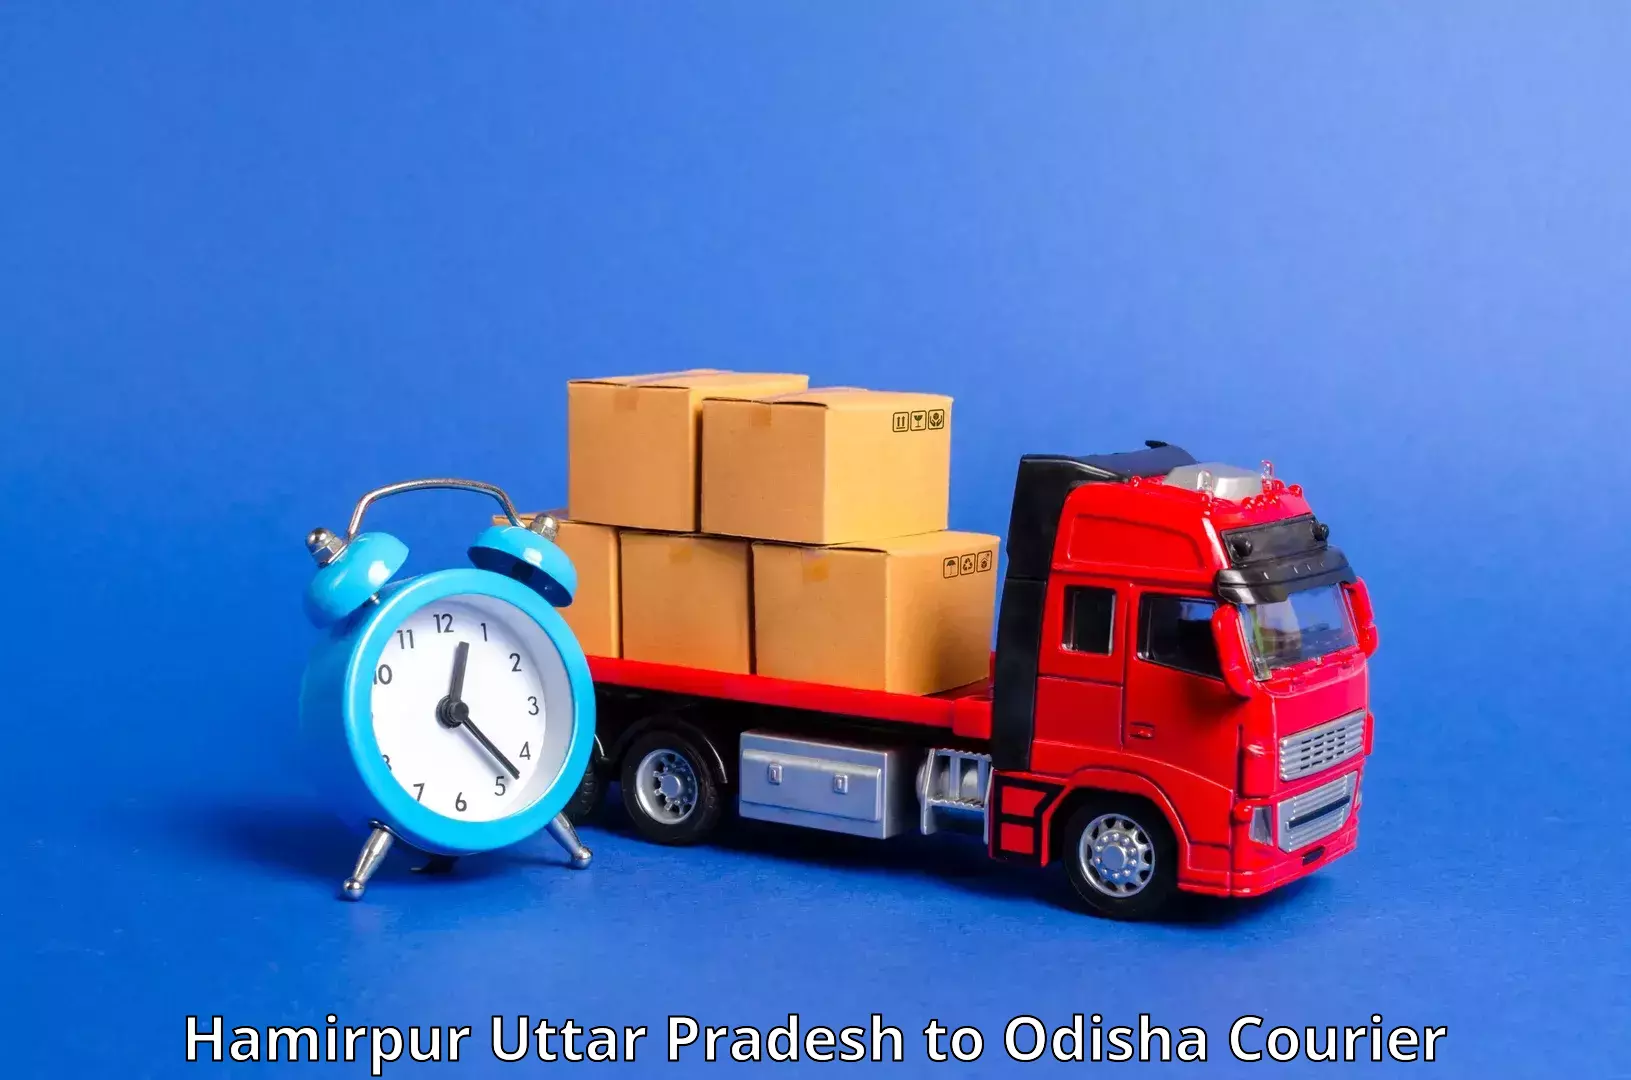 Lightweight courier Hamirpur Uttar Pradesh to Joda